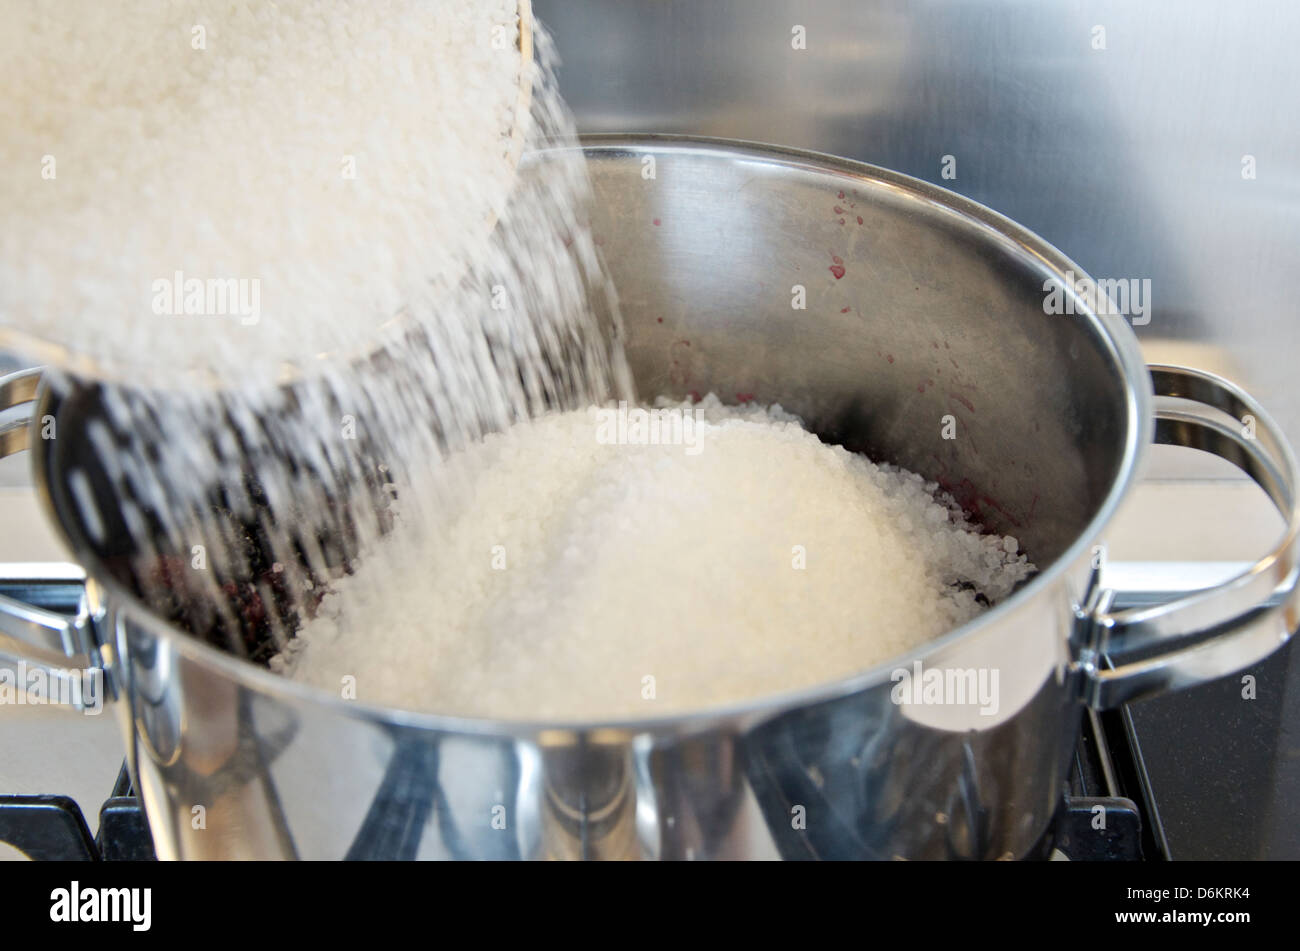 Making Jam: Step 6/10, adding preserving sugar to stainless steel pan of blackberries. Stock Photo